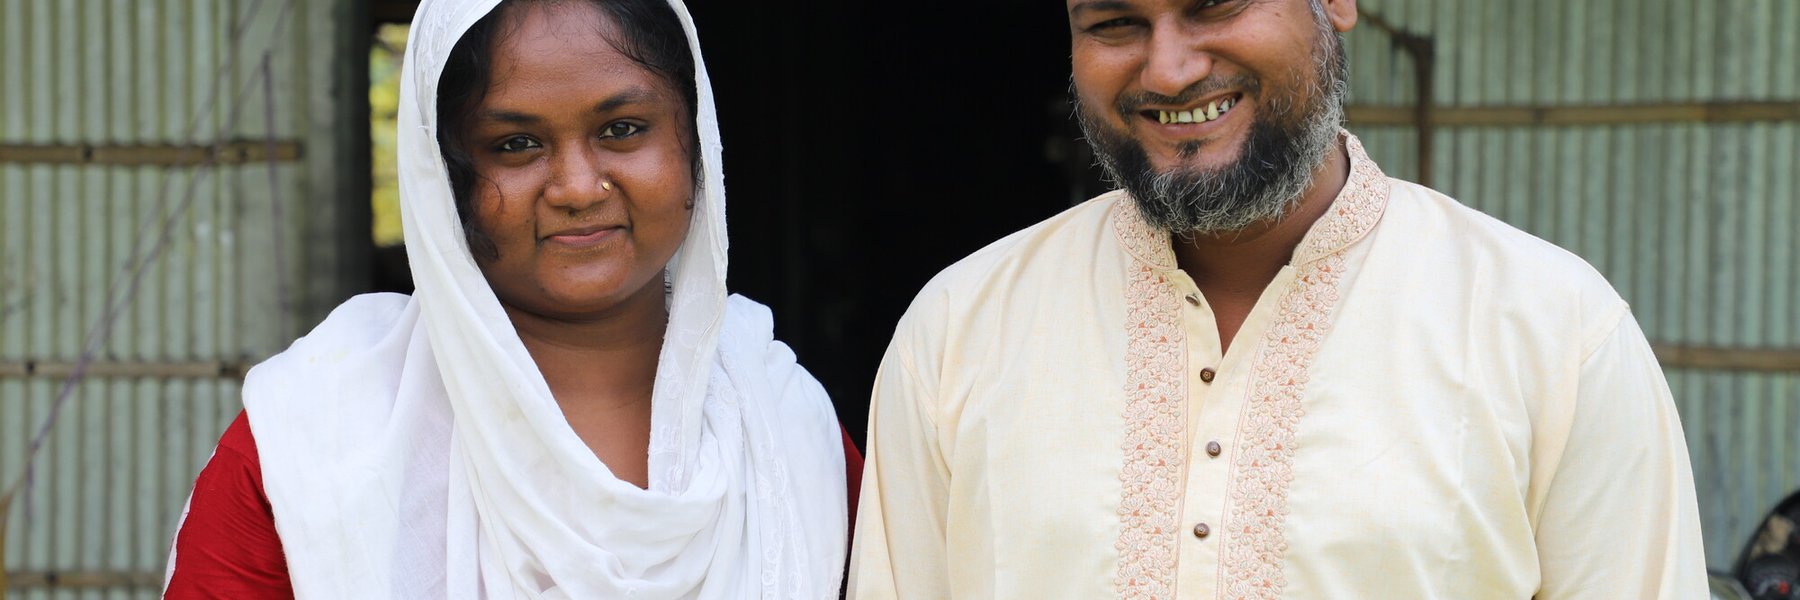 Nujhat and Zakir, Co-Founders of the Talha rug company, BeshiDeshi, in Bangladesh.